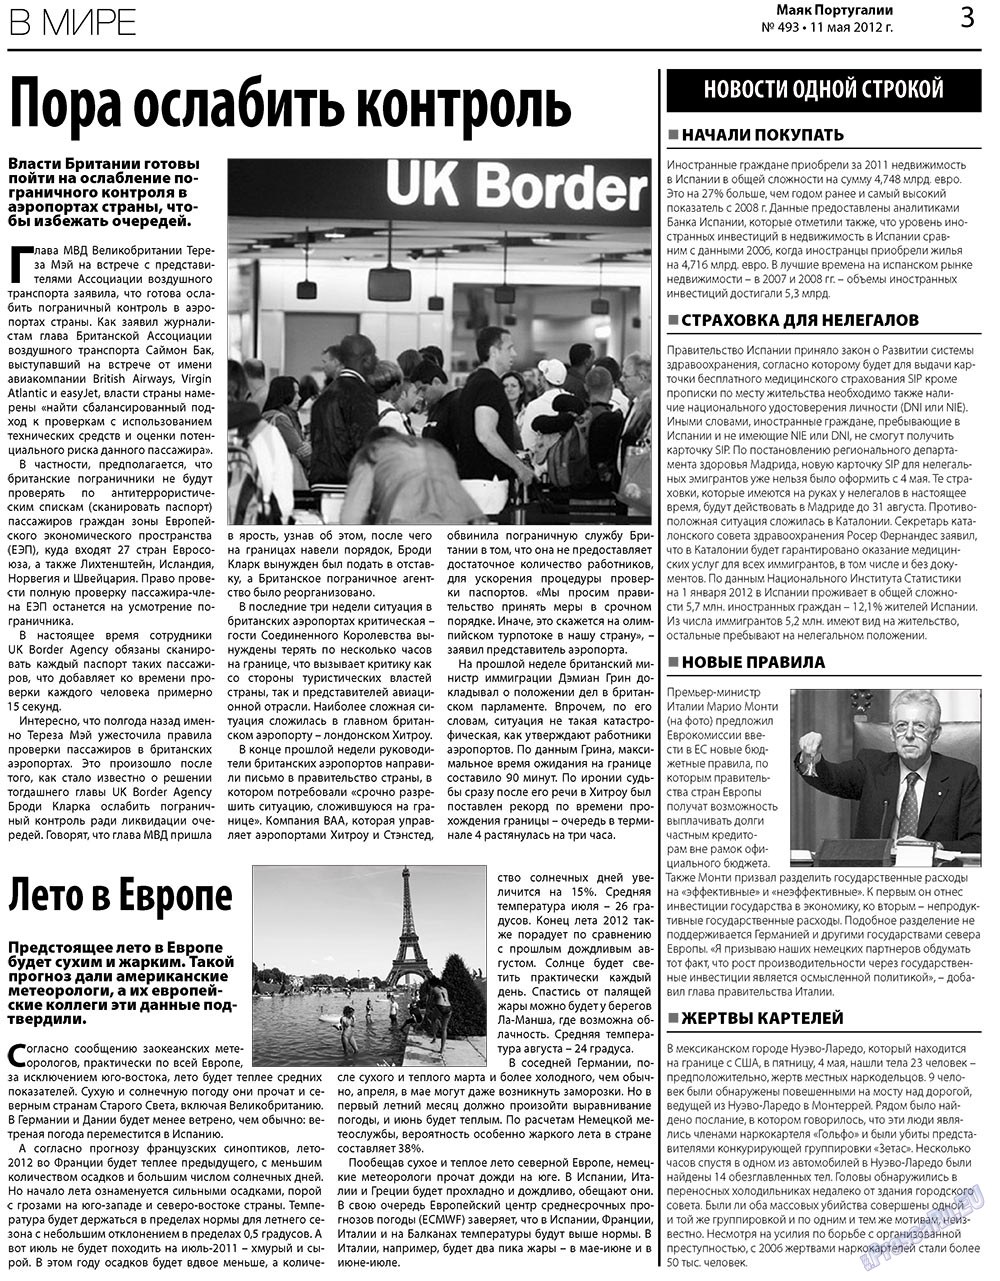 Маяк Португалии, газета. 2012 №493 стр.3